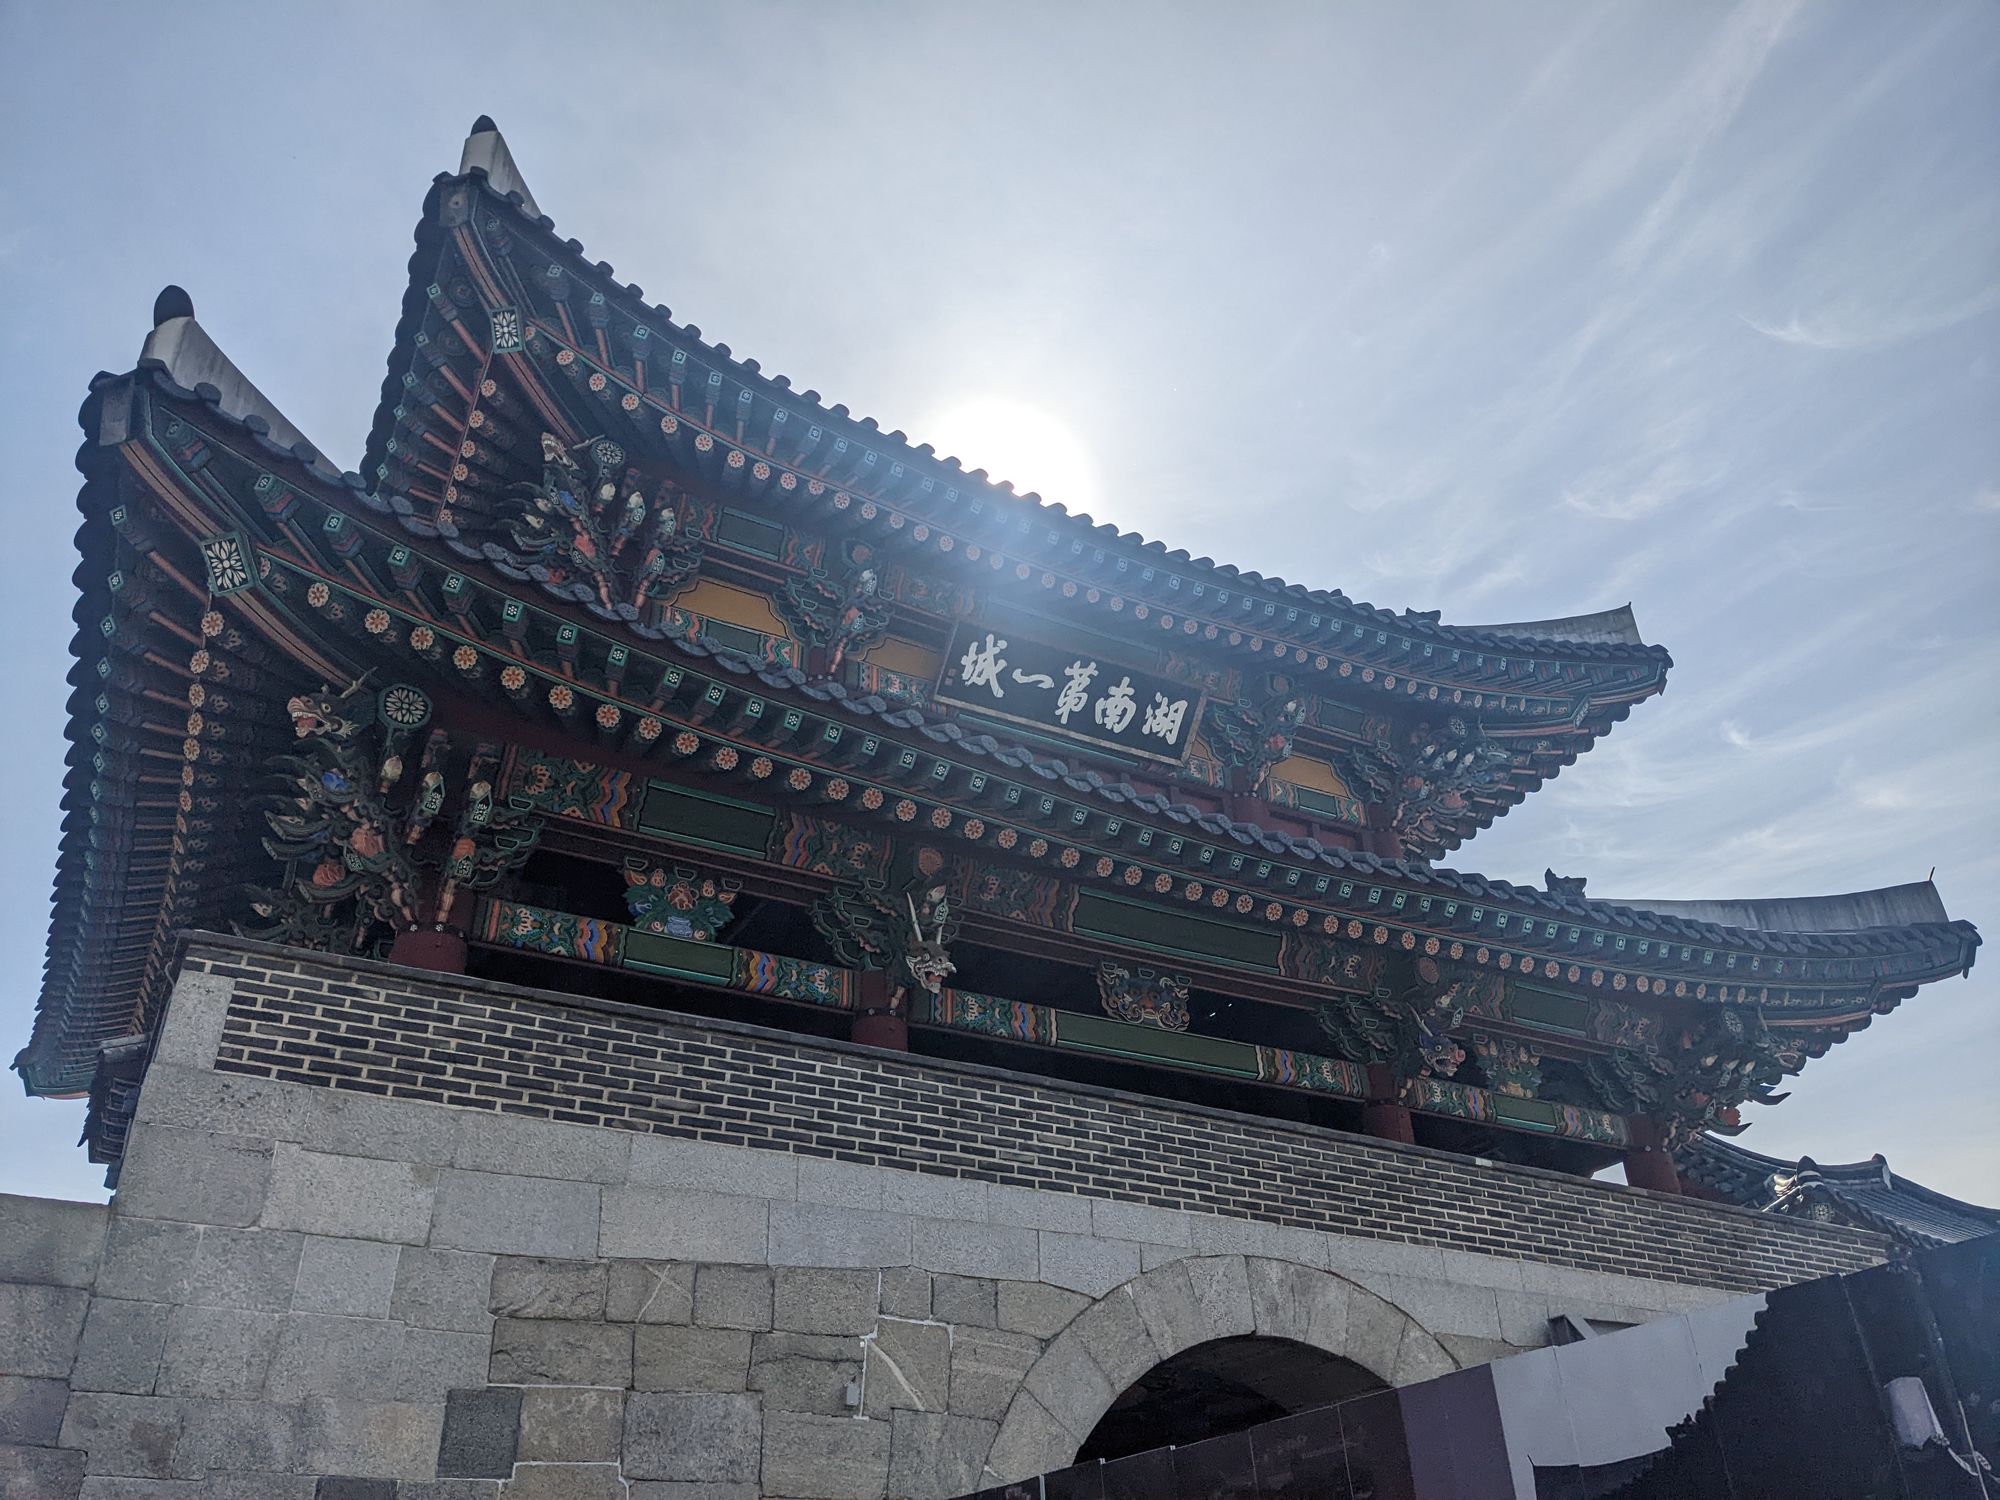 Trip Report: Korea Oct '22